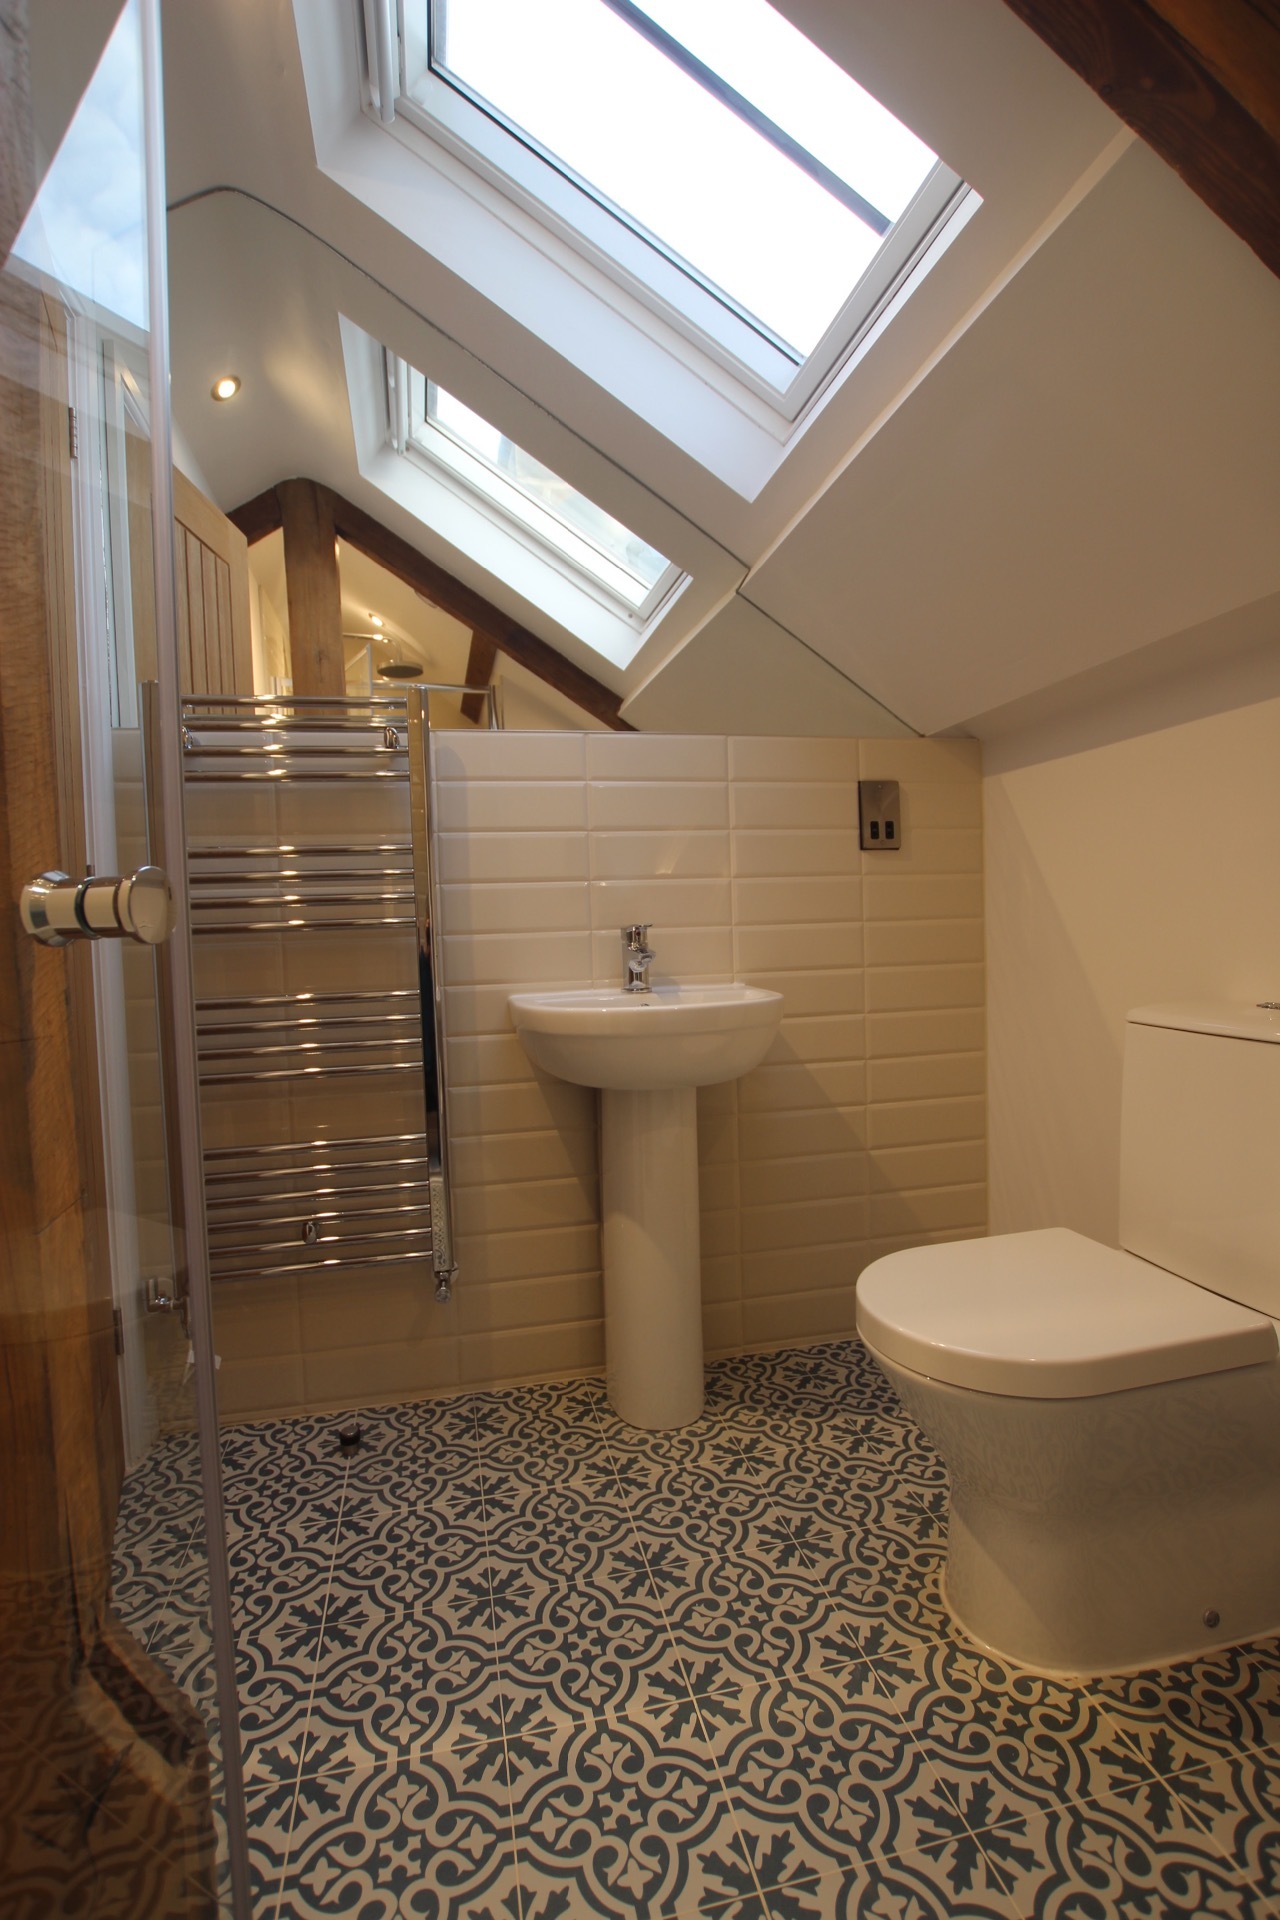 Shower room in loft conversion